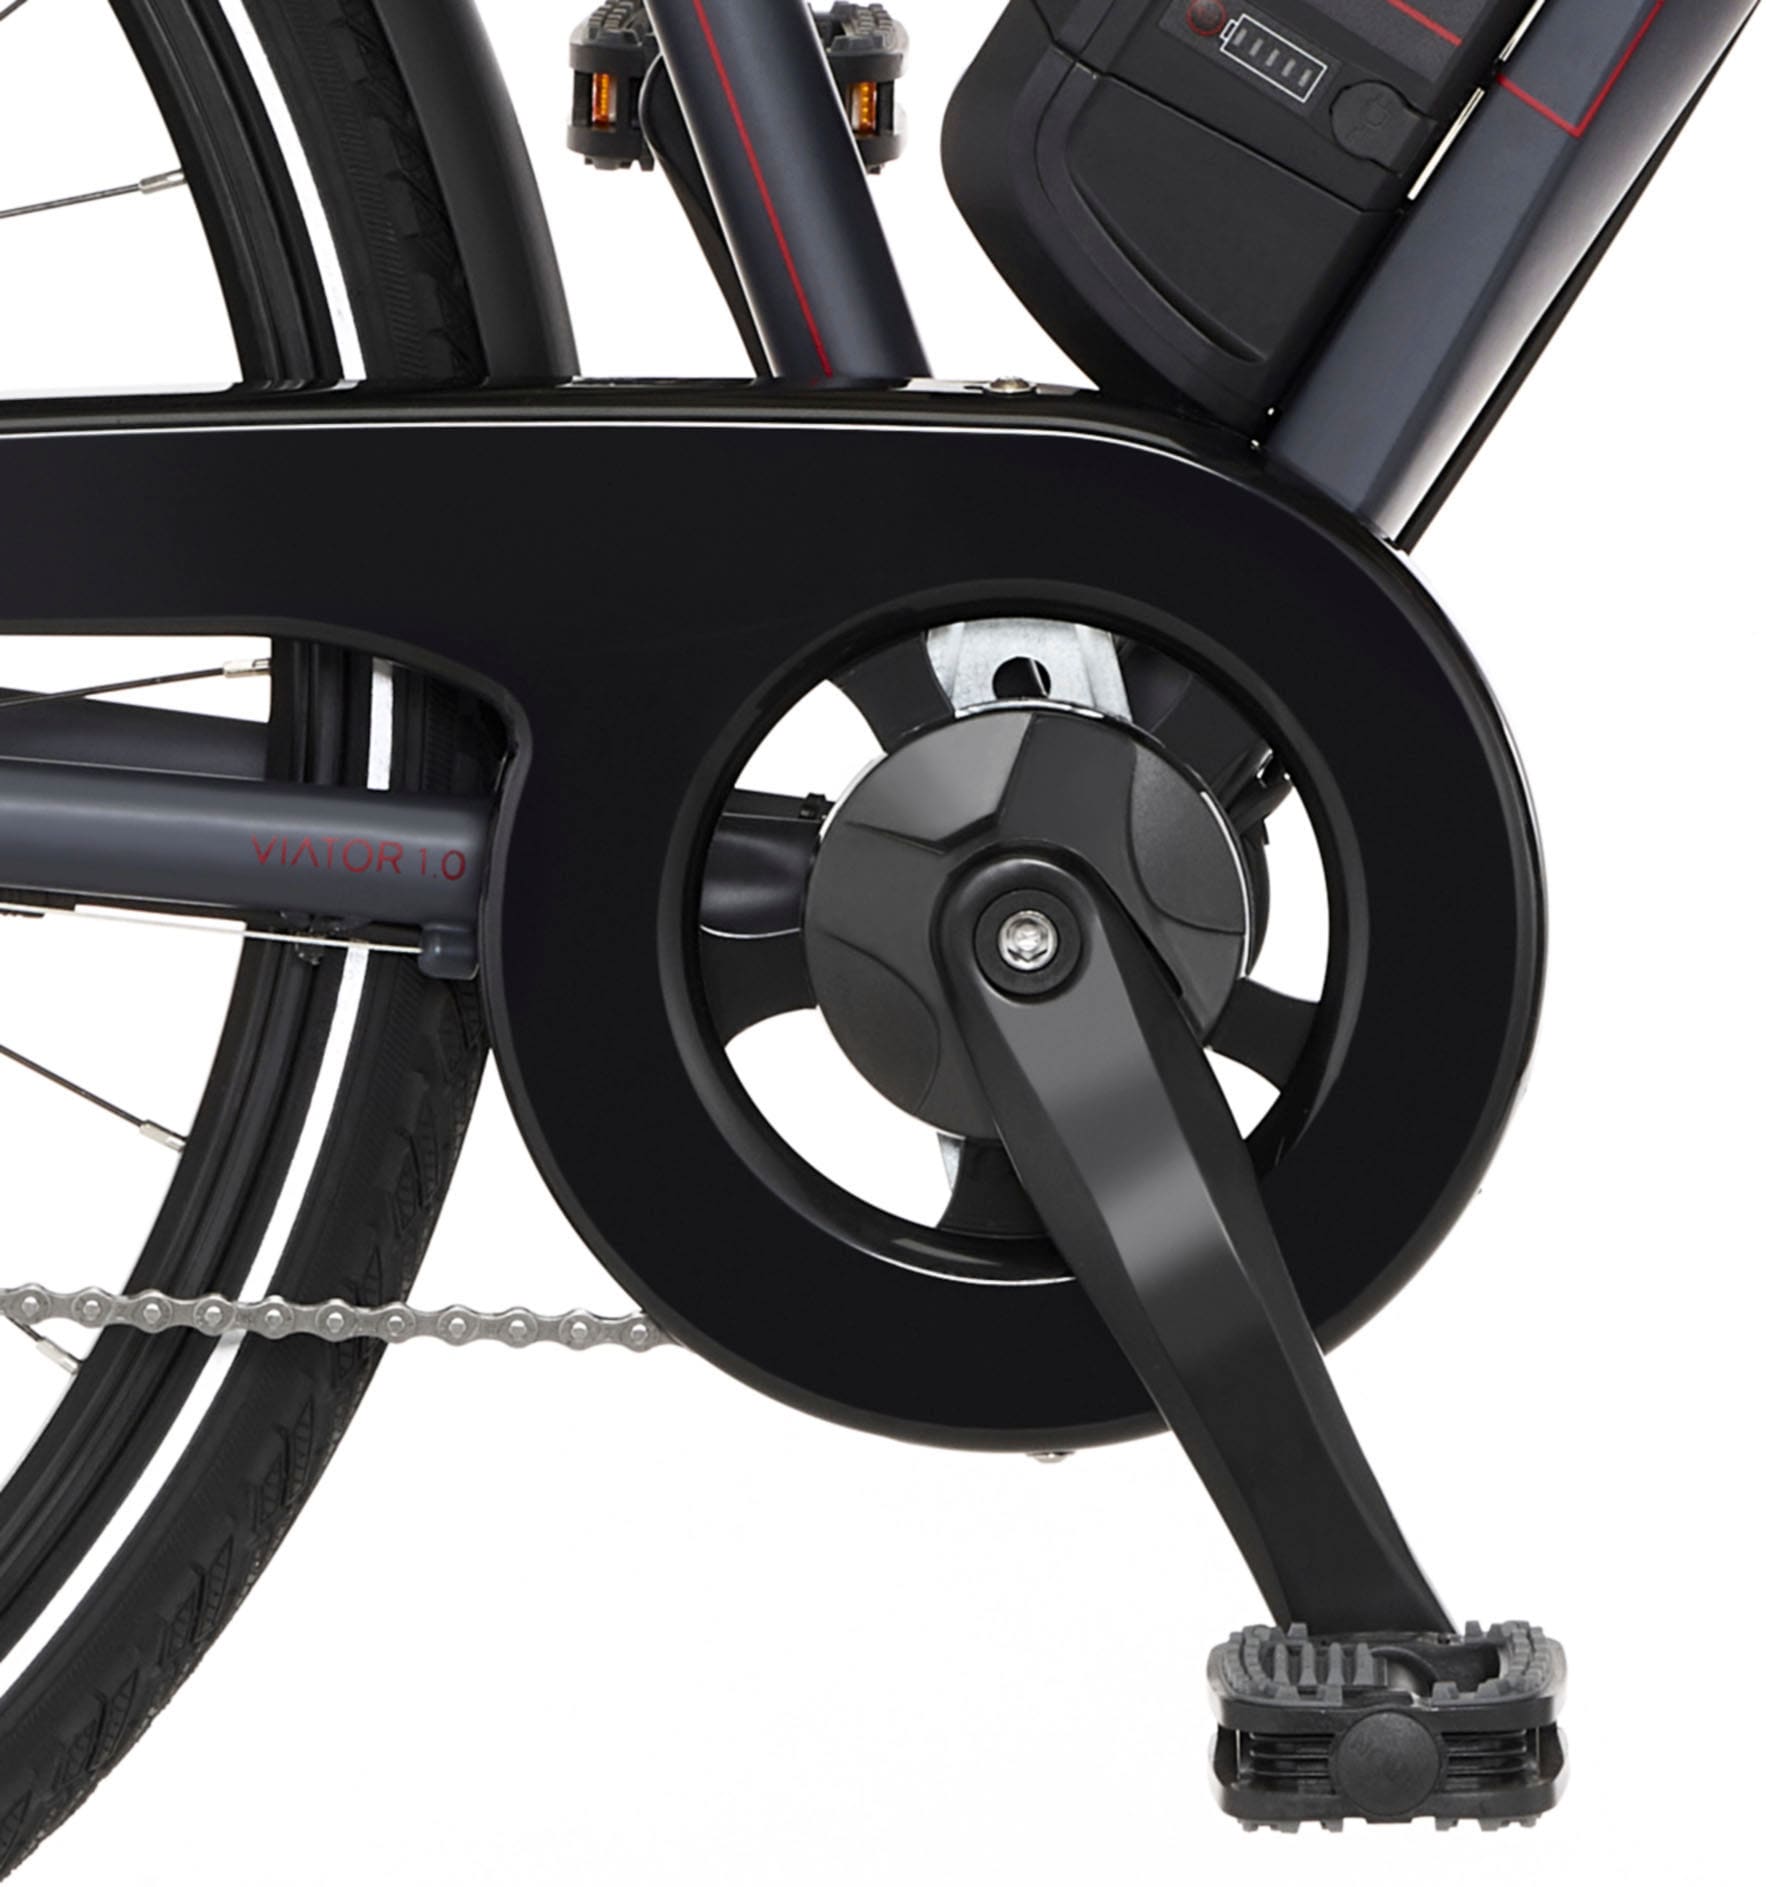 FISCHER Fahrrad E-Bike »VIATOR 1.0 Trapez 44«, 8 Gang, Shimano, Acera, Heckmotor 250 W, (mit Faltschloss)